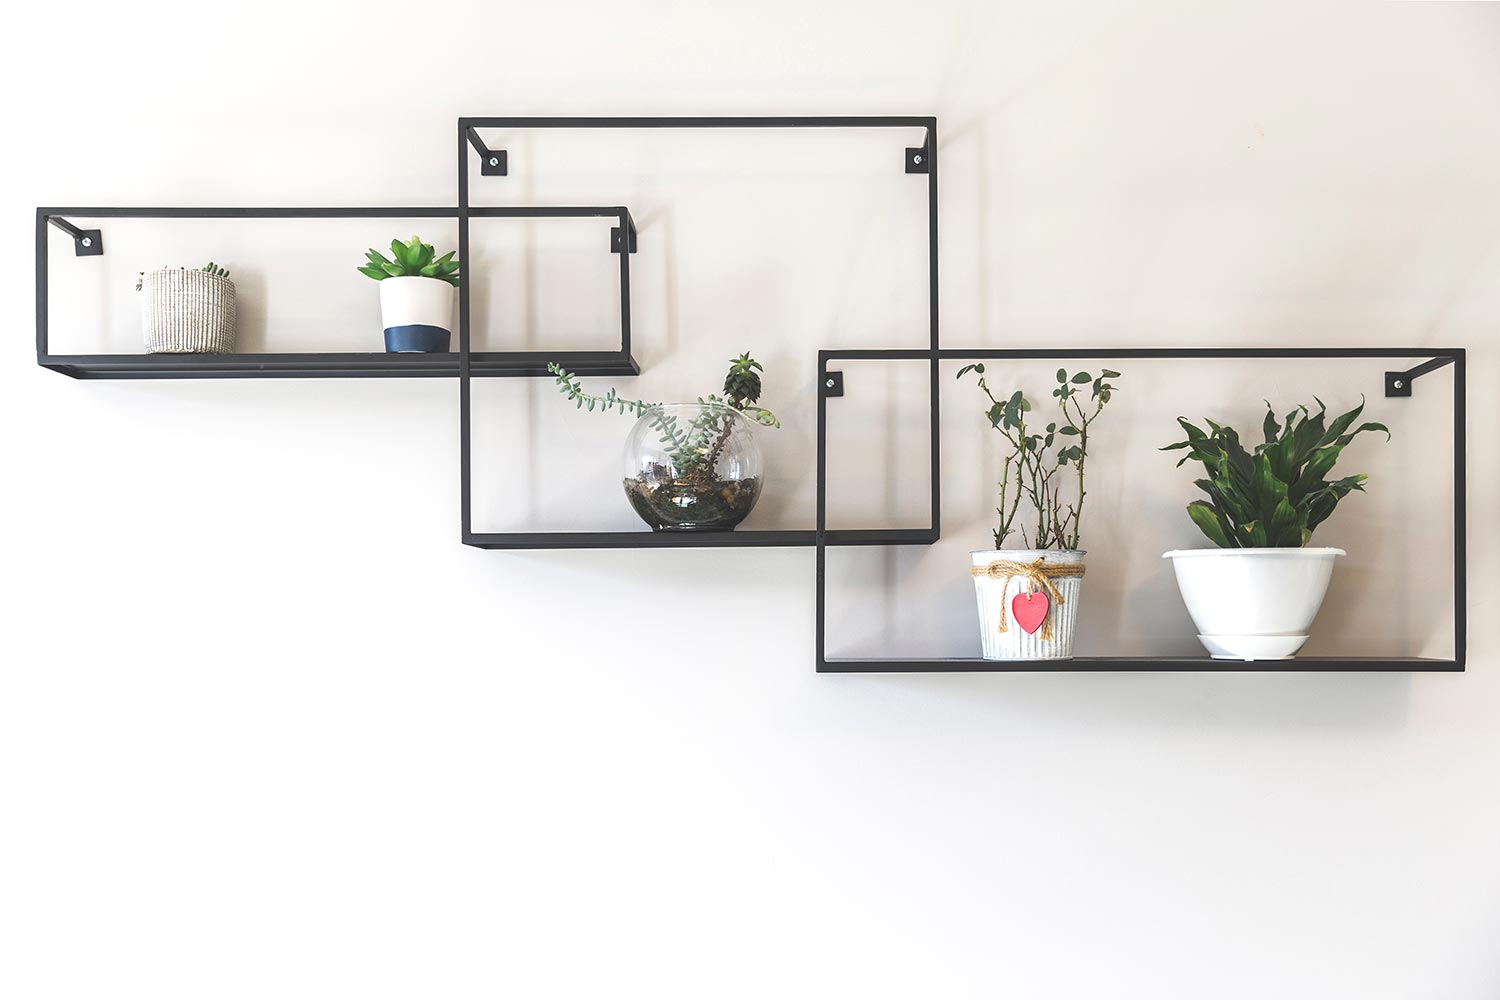 Three decorative metal rectangular and square shape shelves